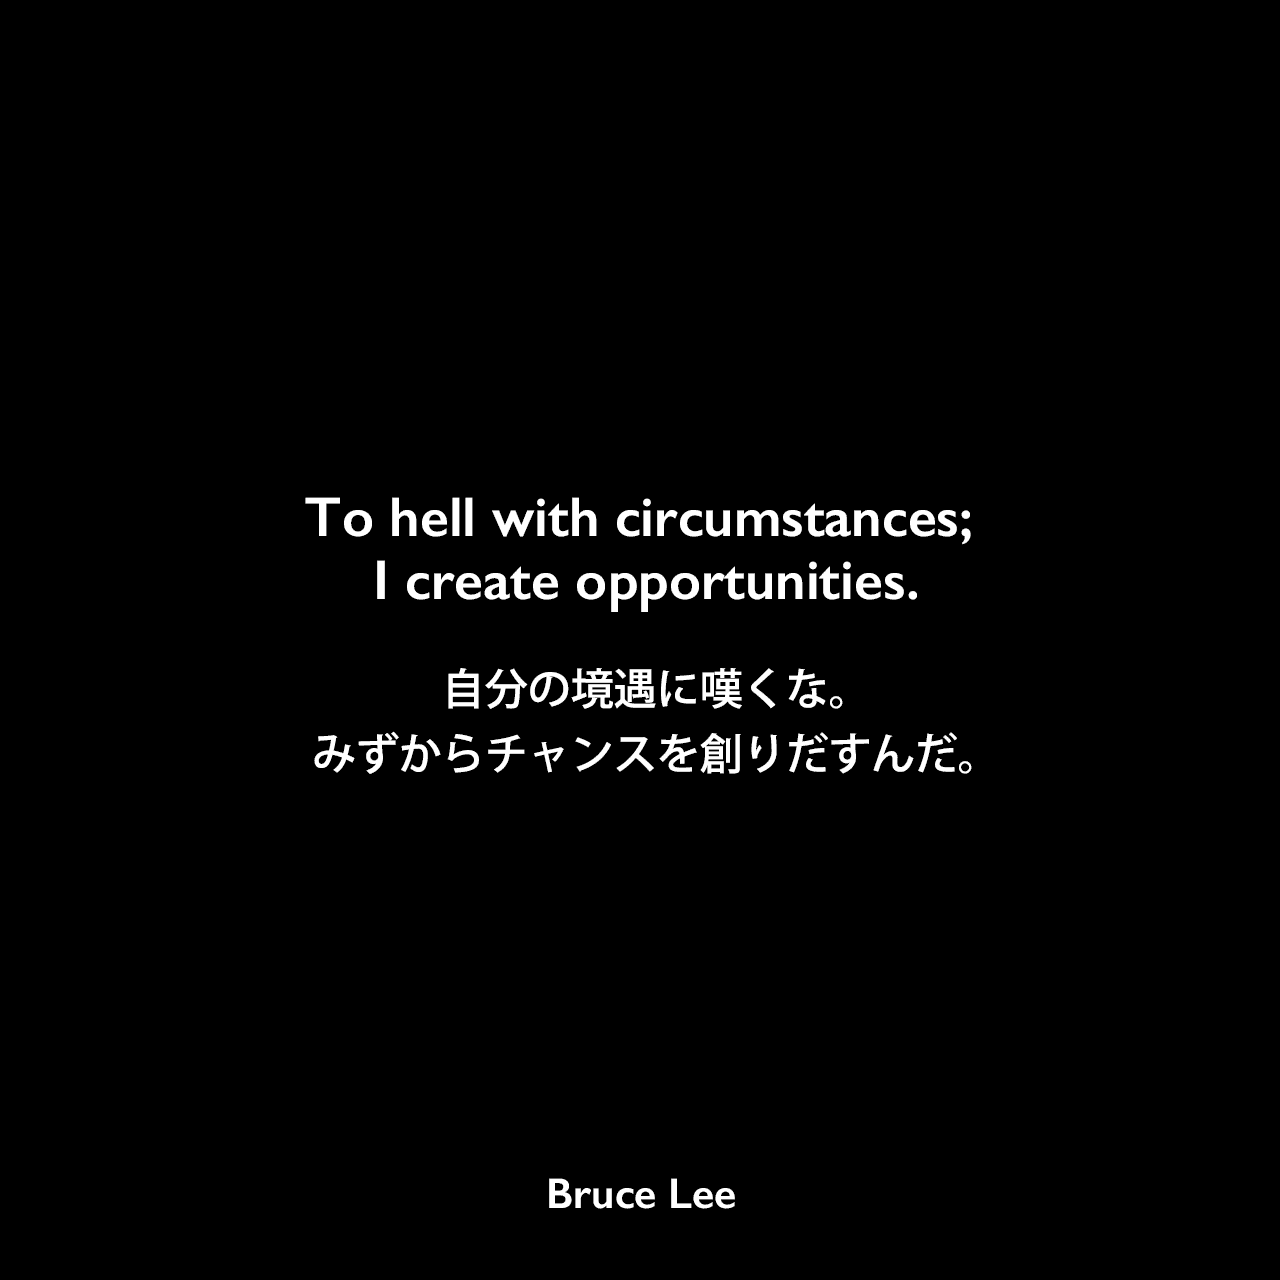 To hell with circumstances; I create opportunities.自分の境遇に嘆くな。みずからチャンスを創りだすんだ。Bruce Lee